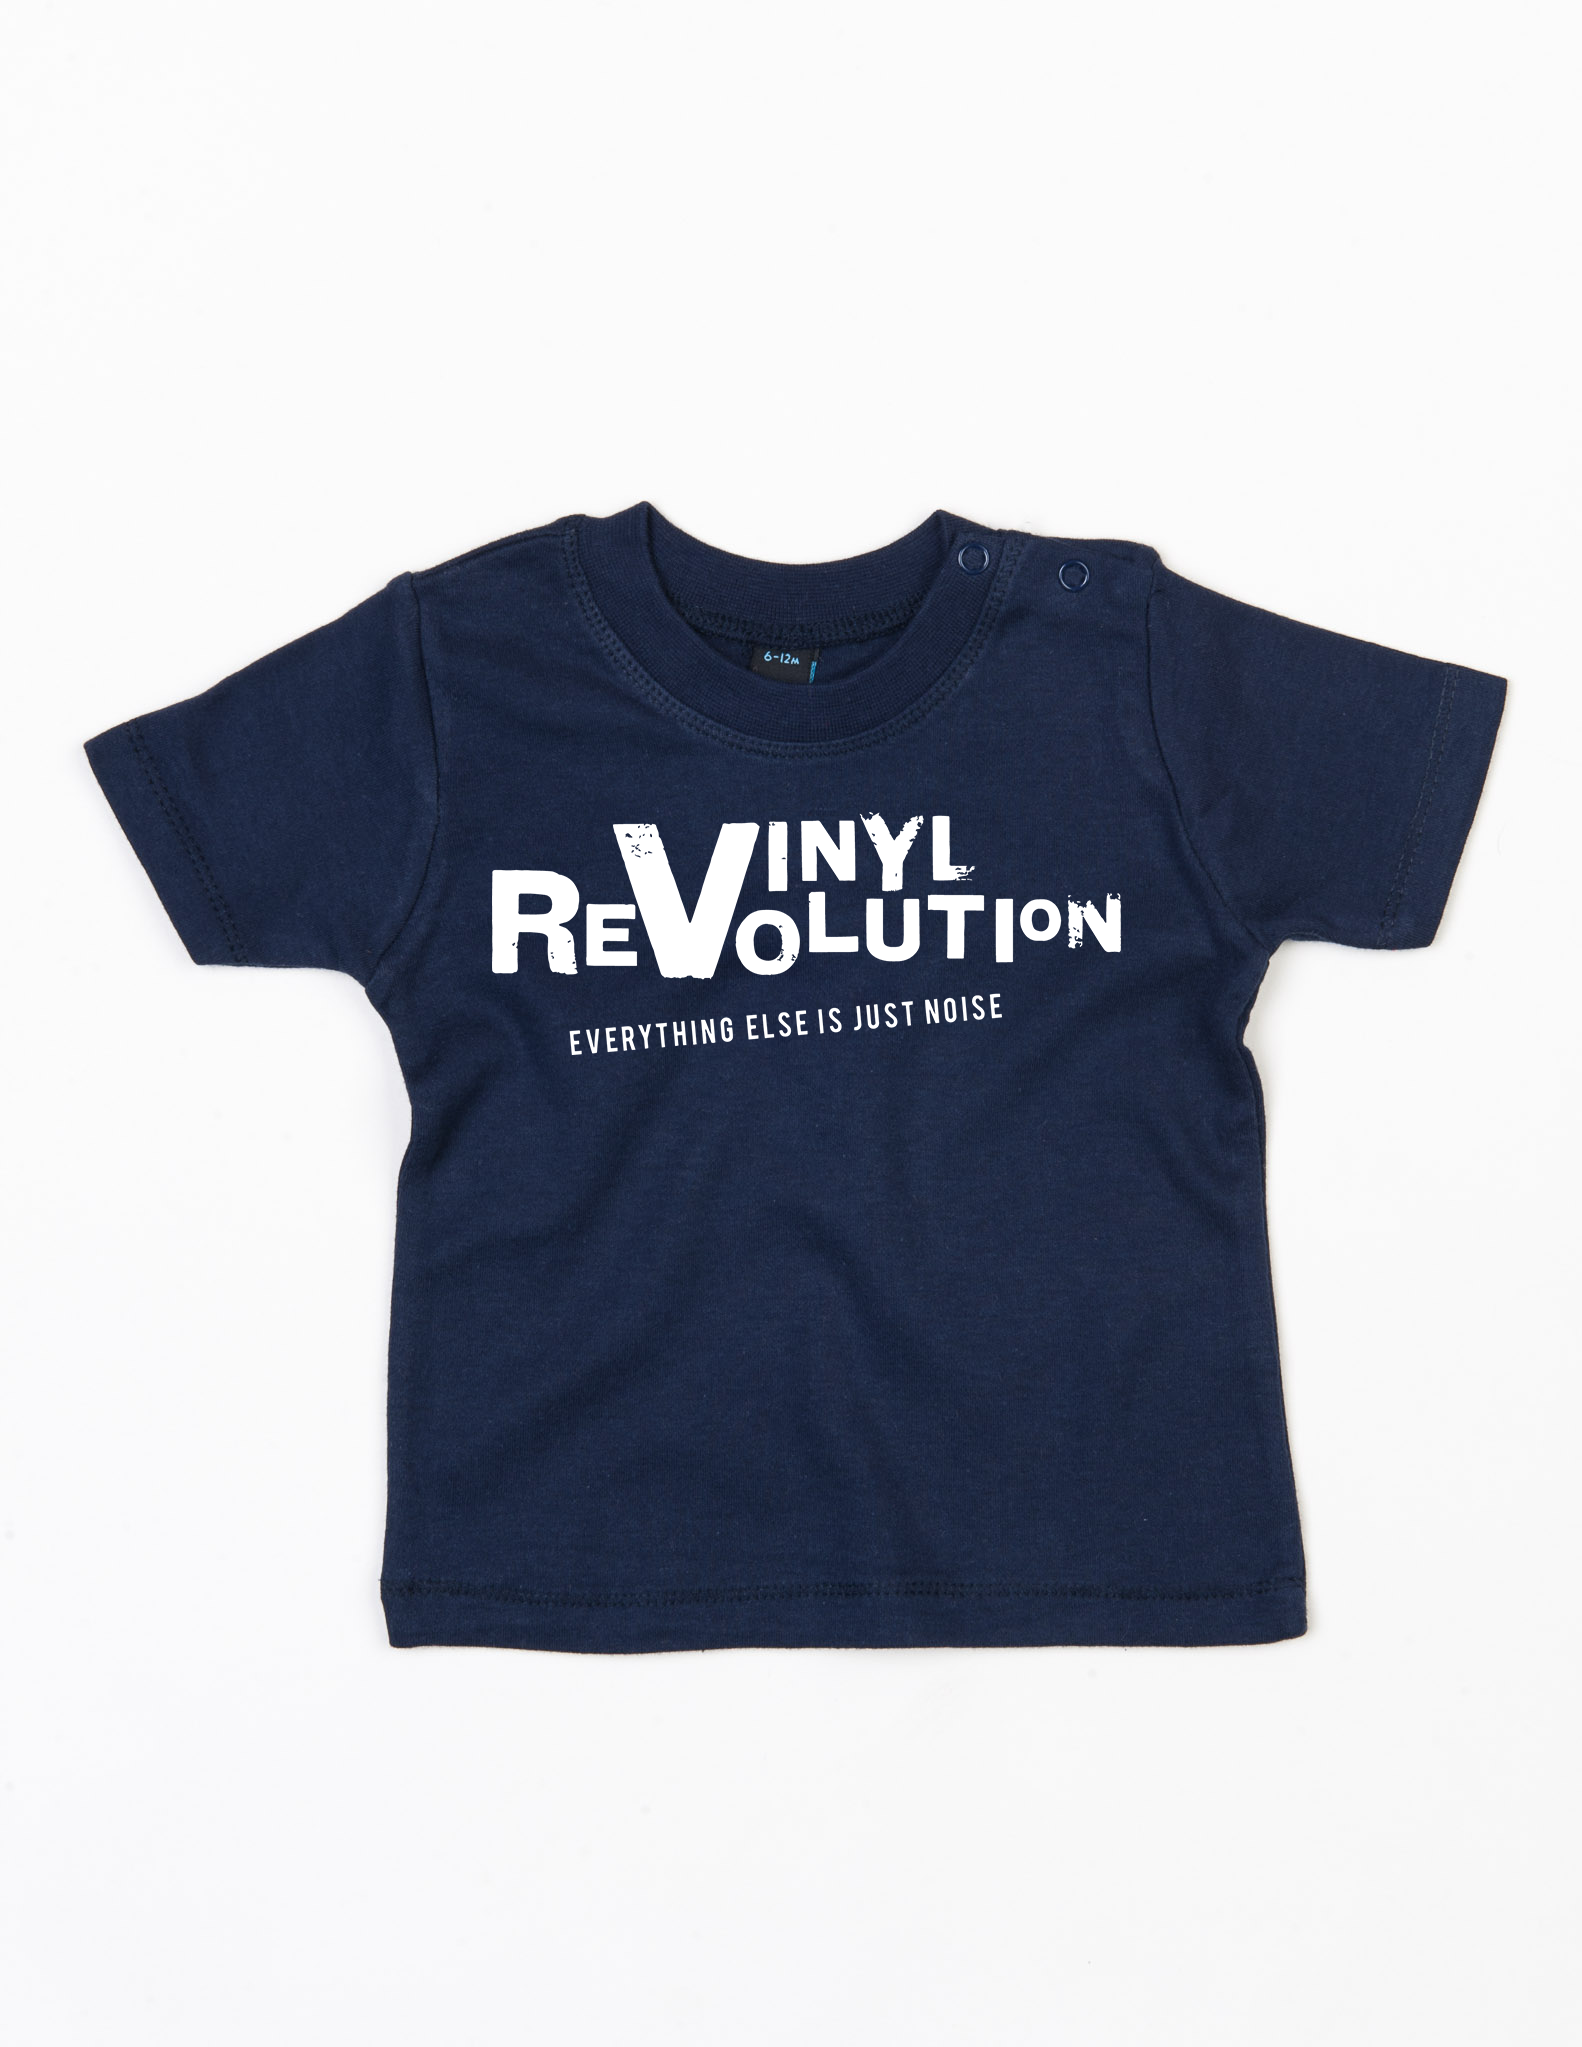 Vinyl Revolution' Organic Baby T-Shirt